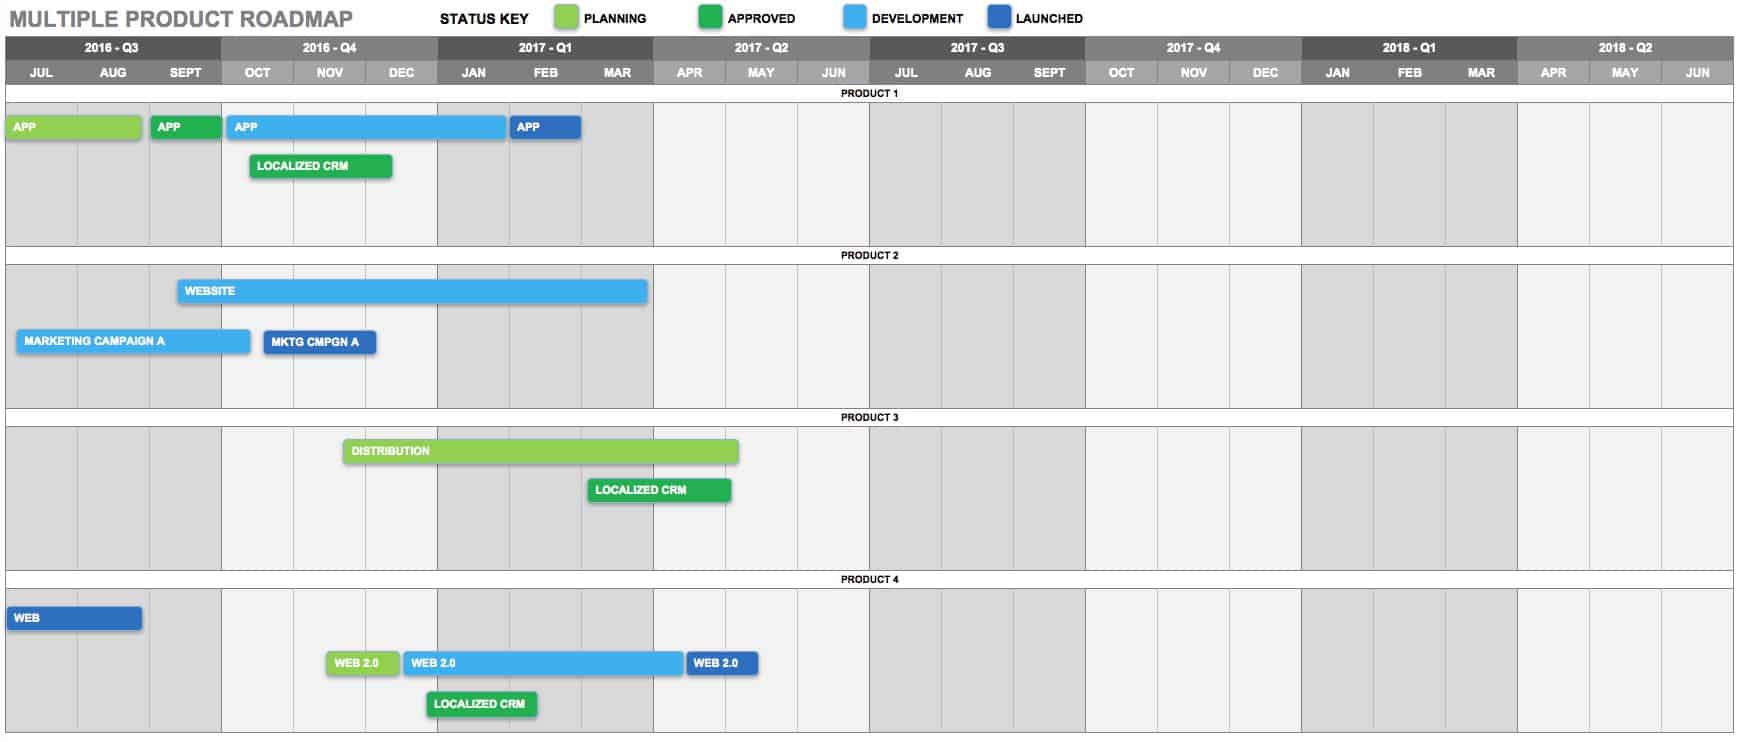 multiple product roadmap template